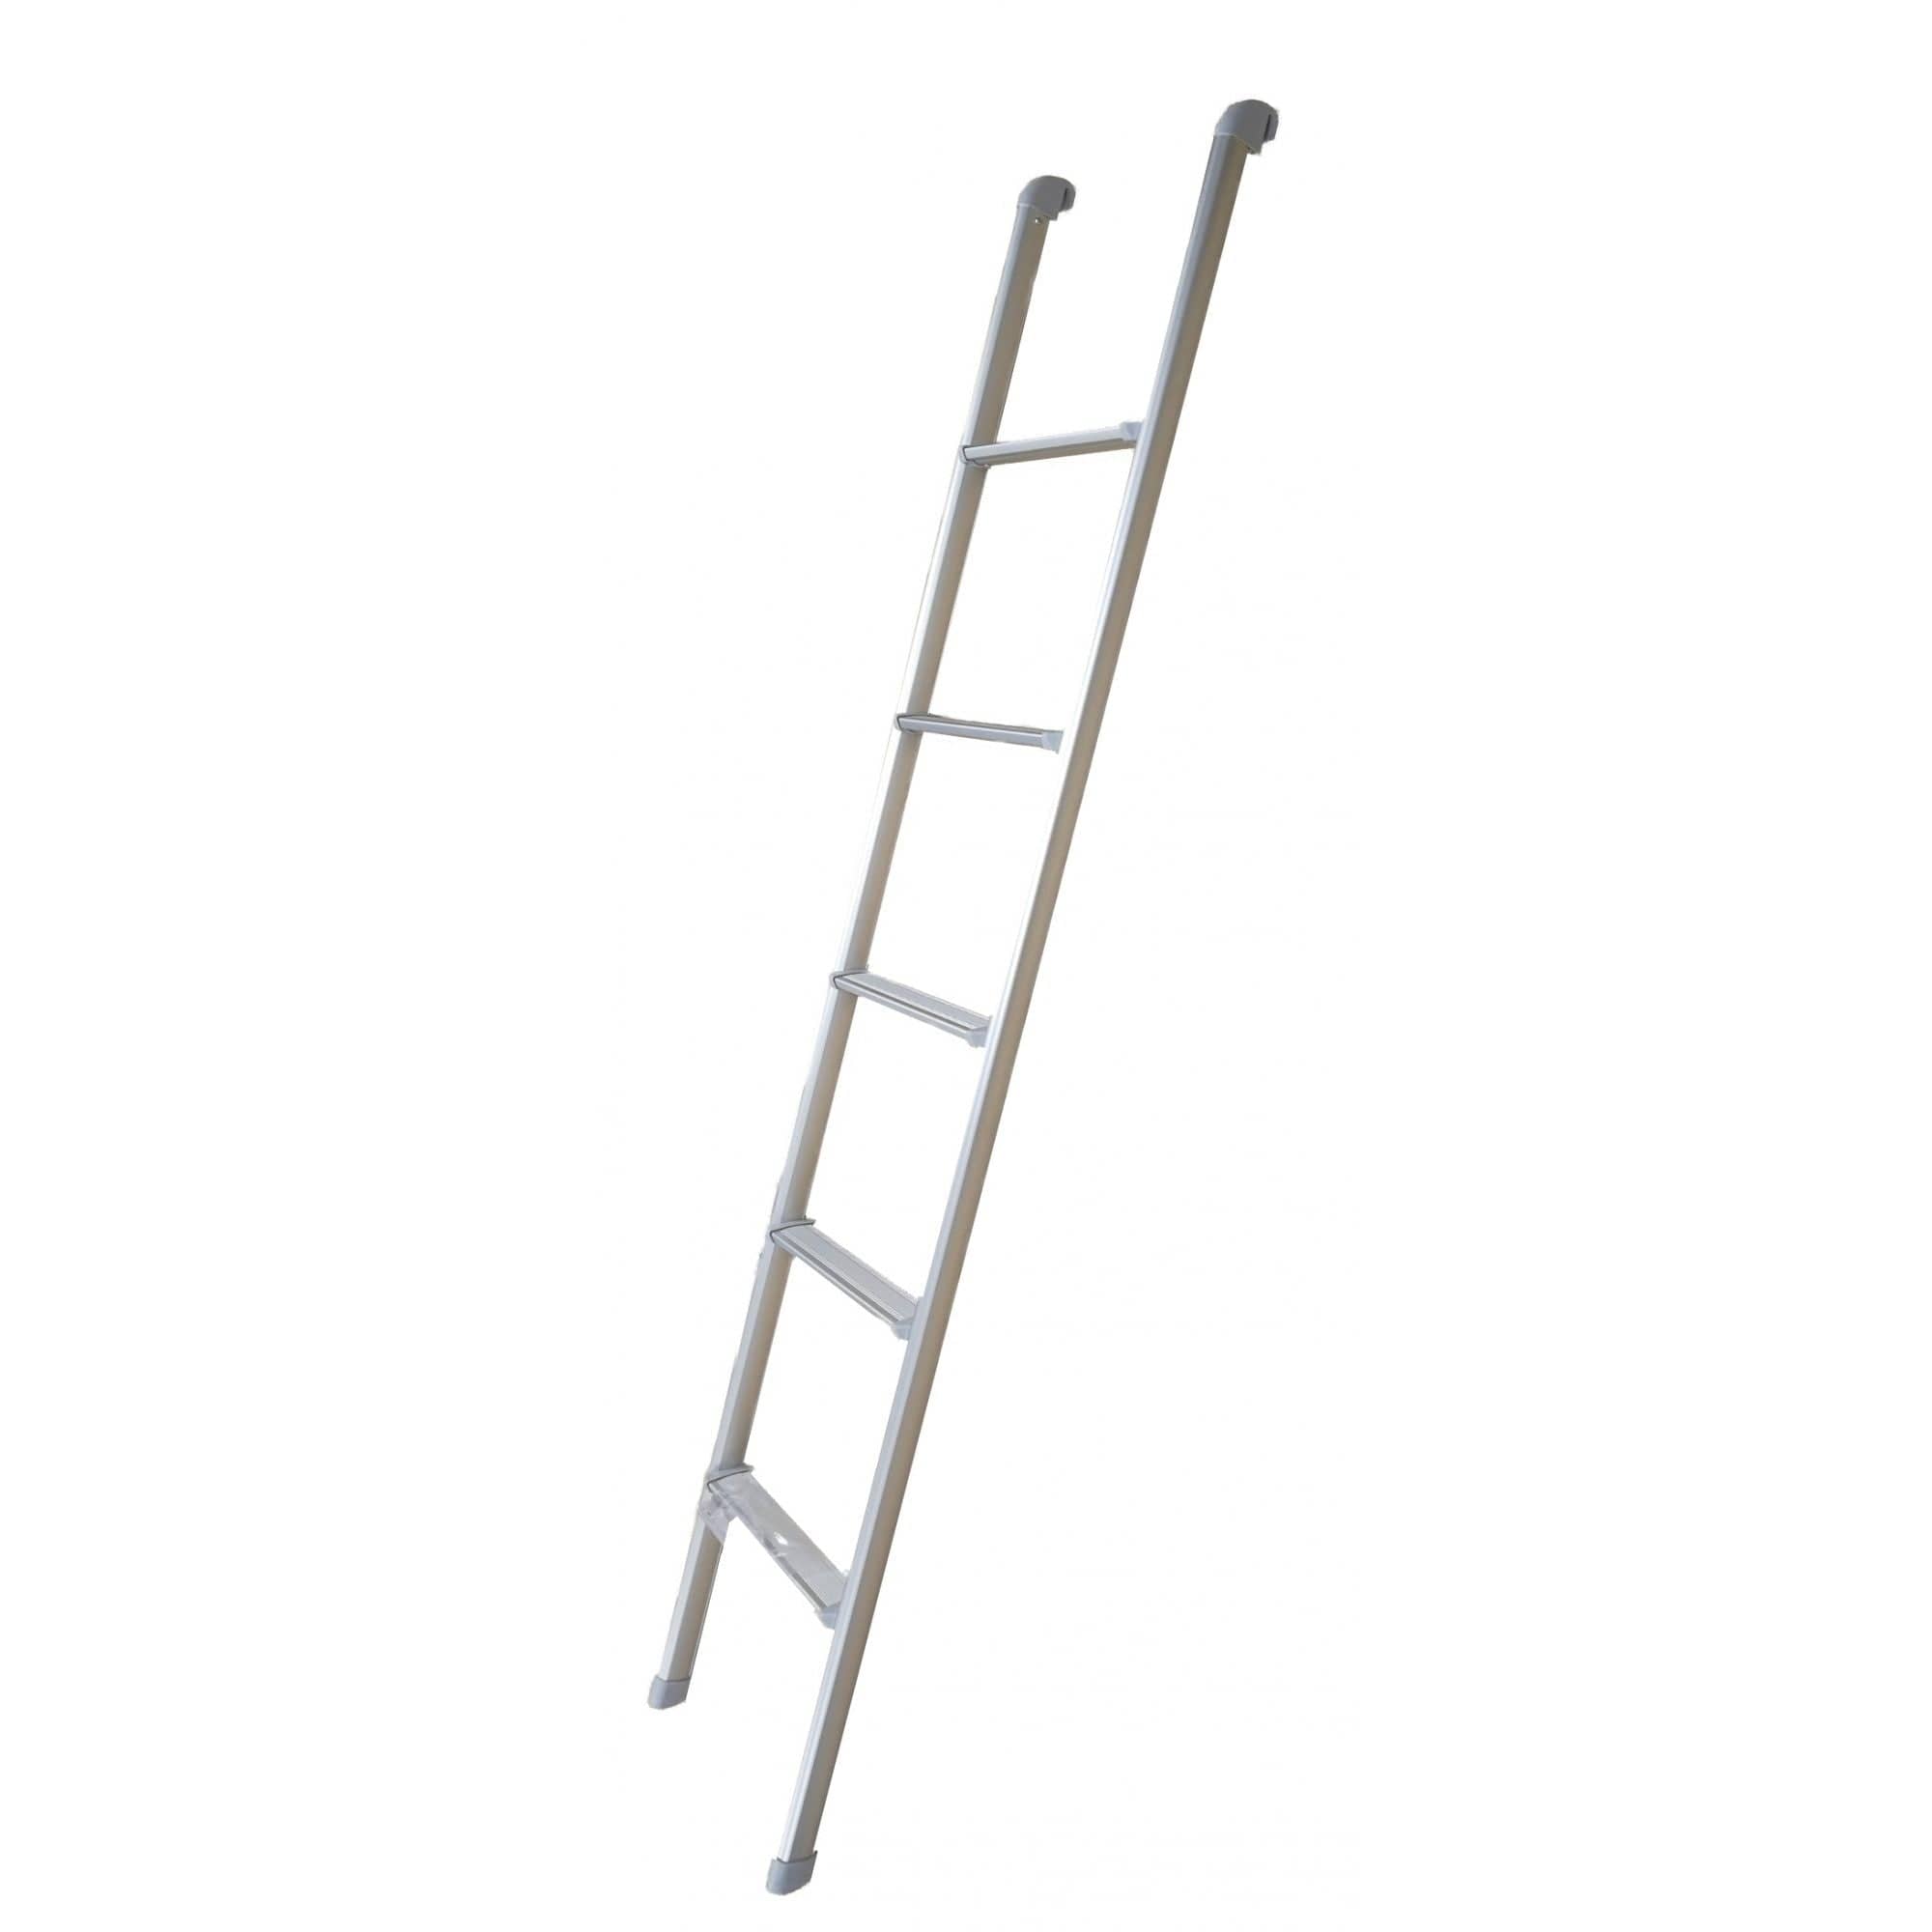 Bunk Ladder 1500mm x 280mm    30645